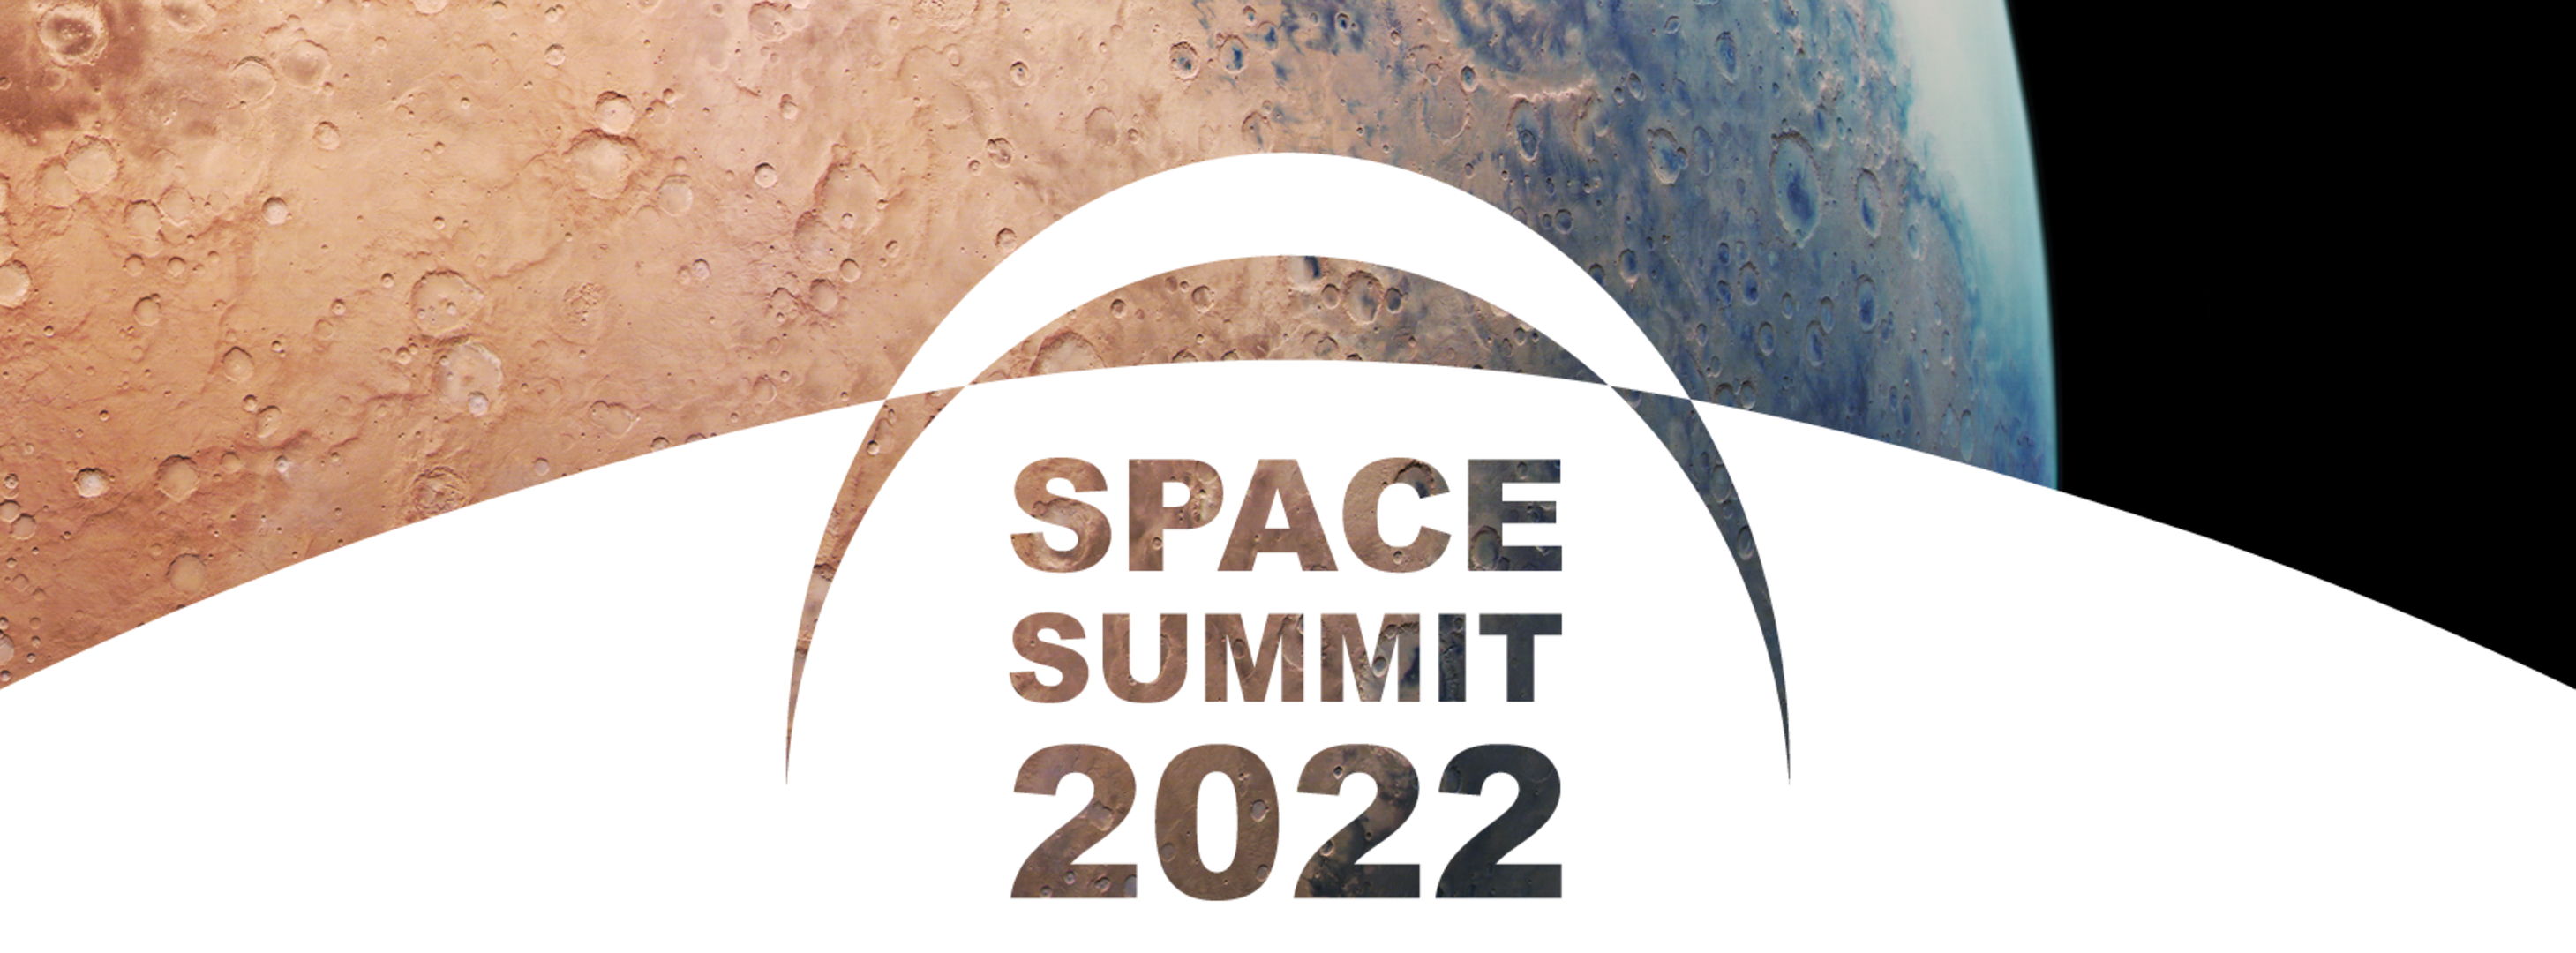 What happened in European Space Summit 2022